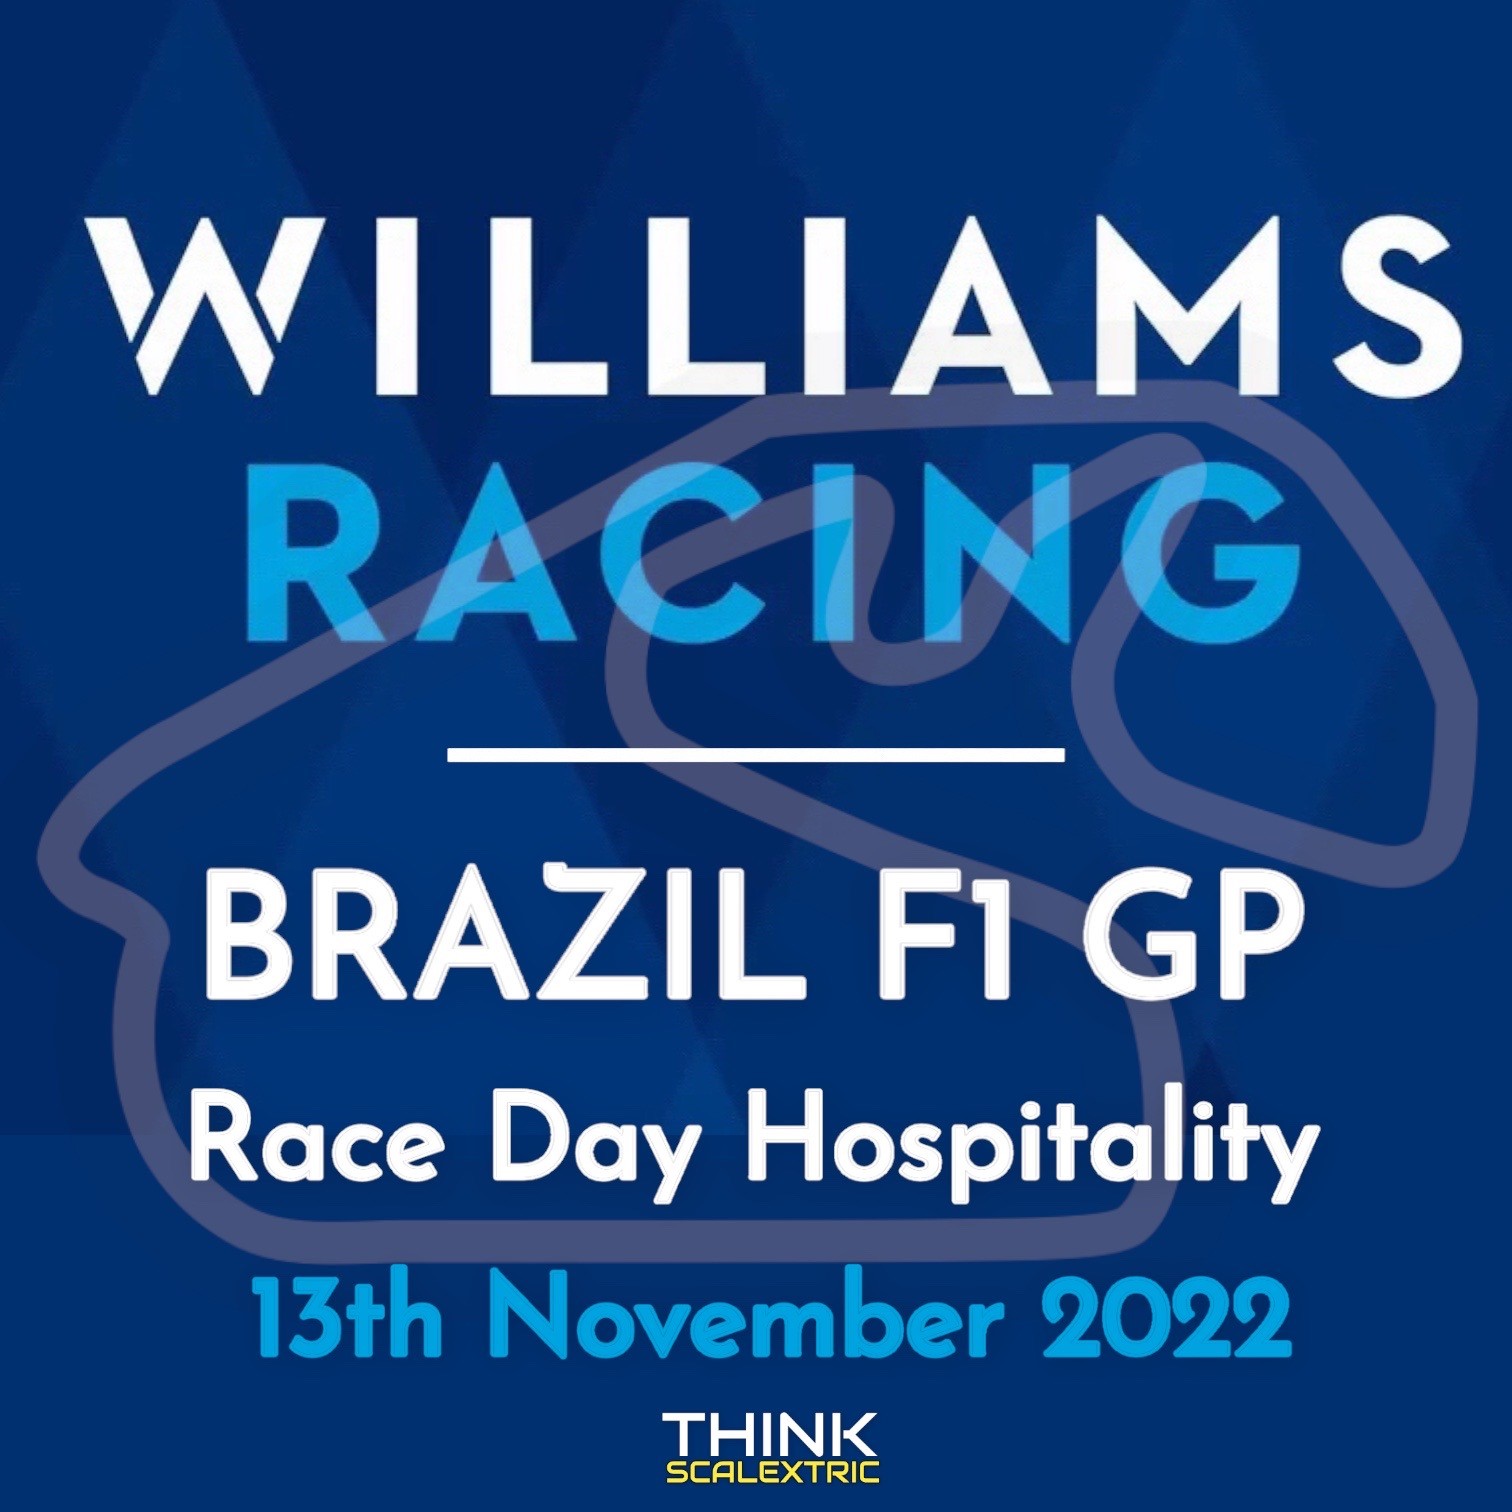 williams racing race day hospitality brazil f1 gp 2022 giant scalextric bespoke track build